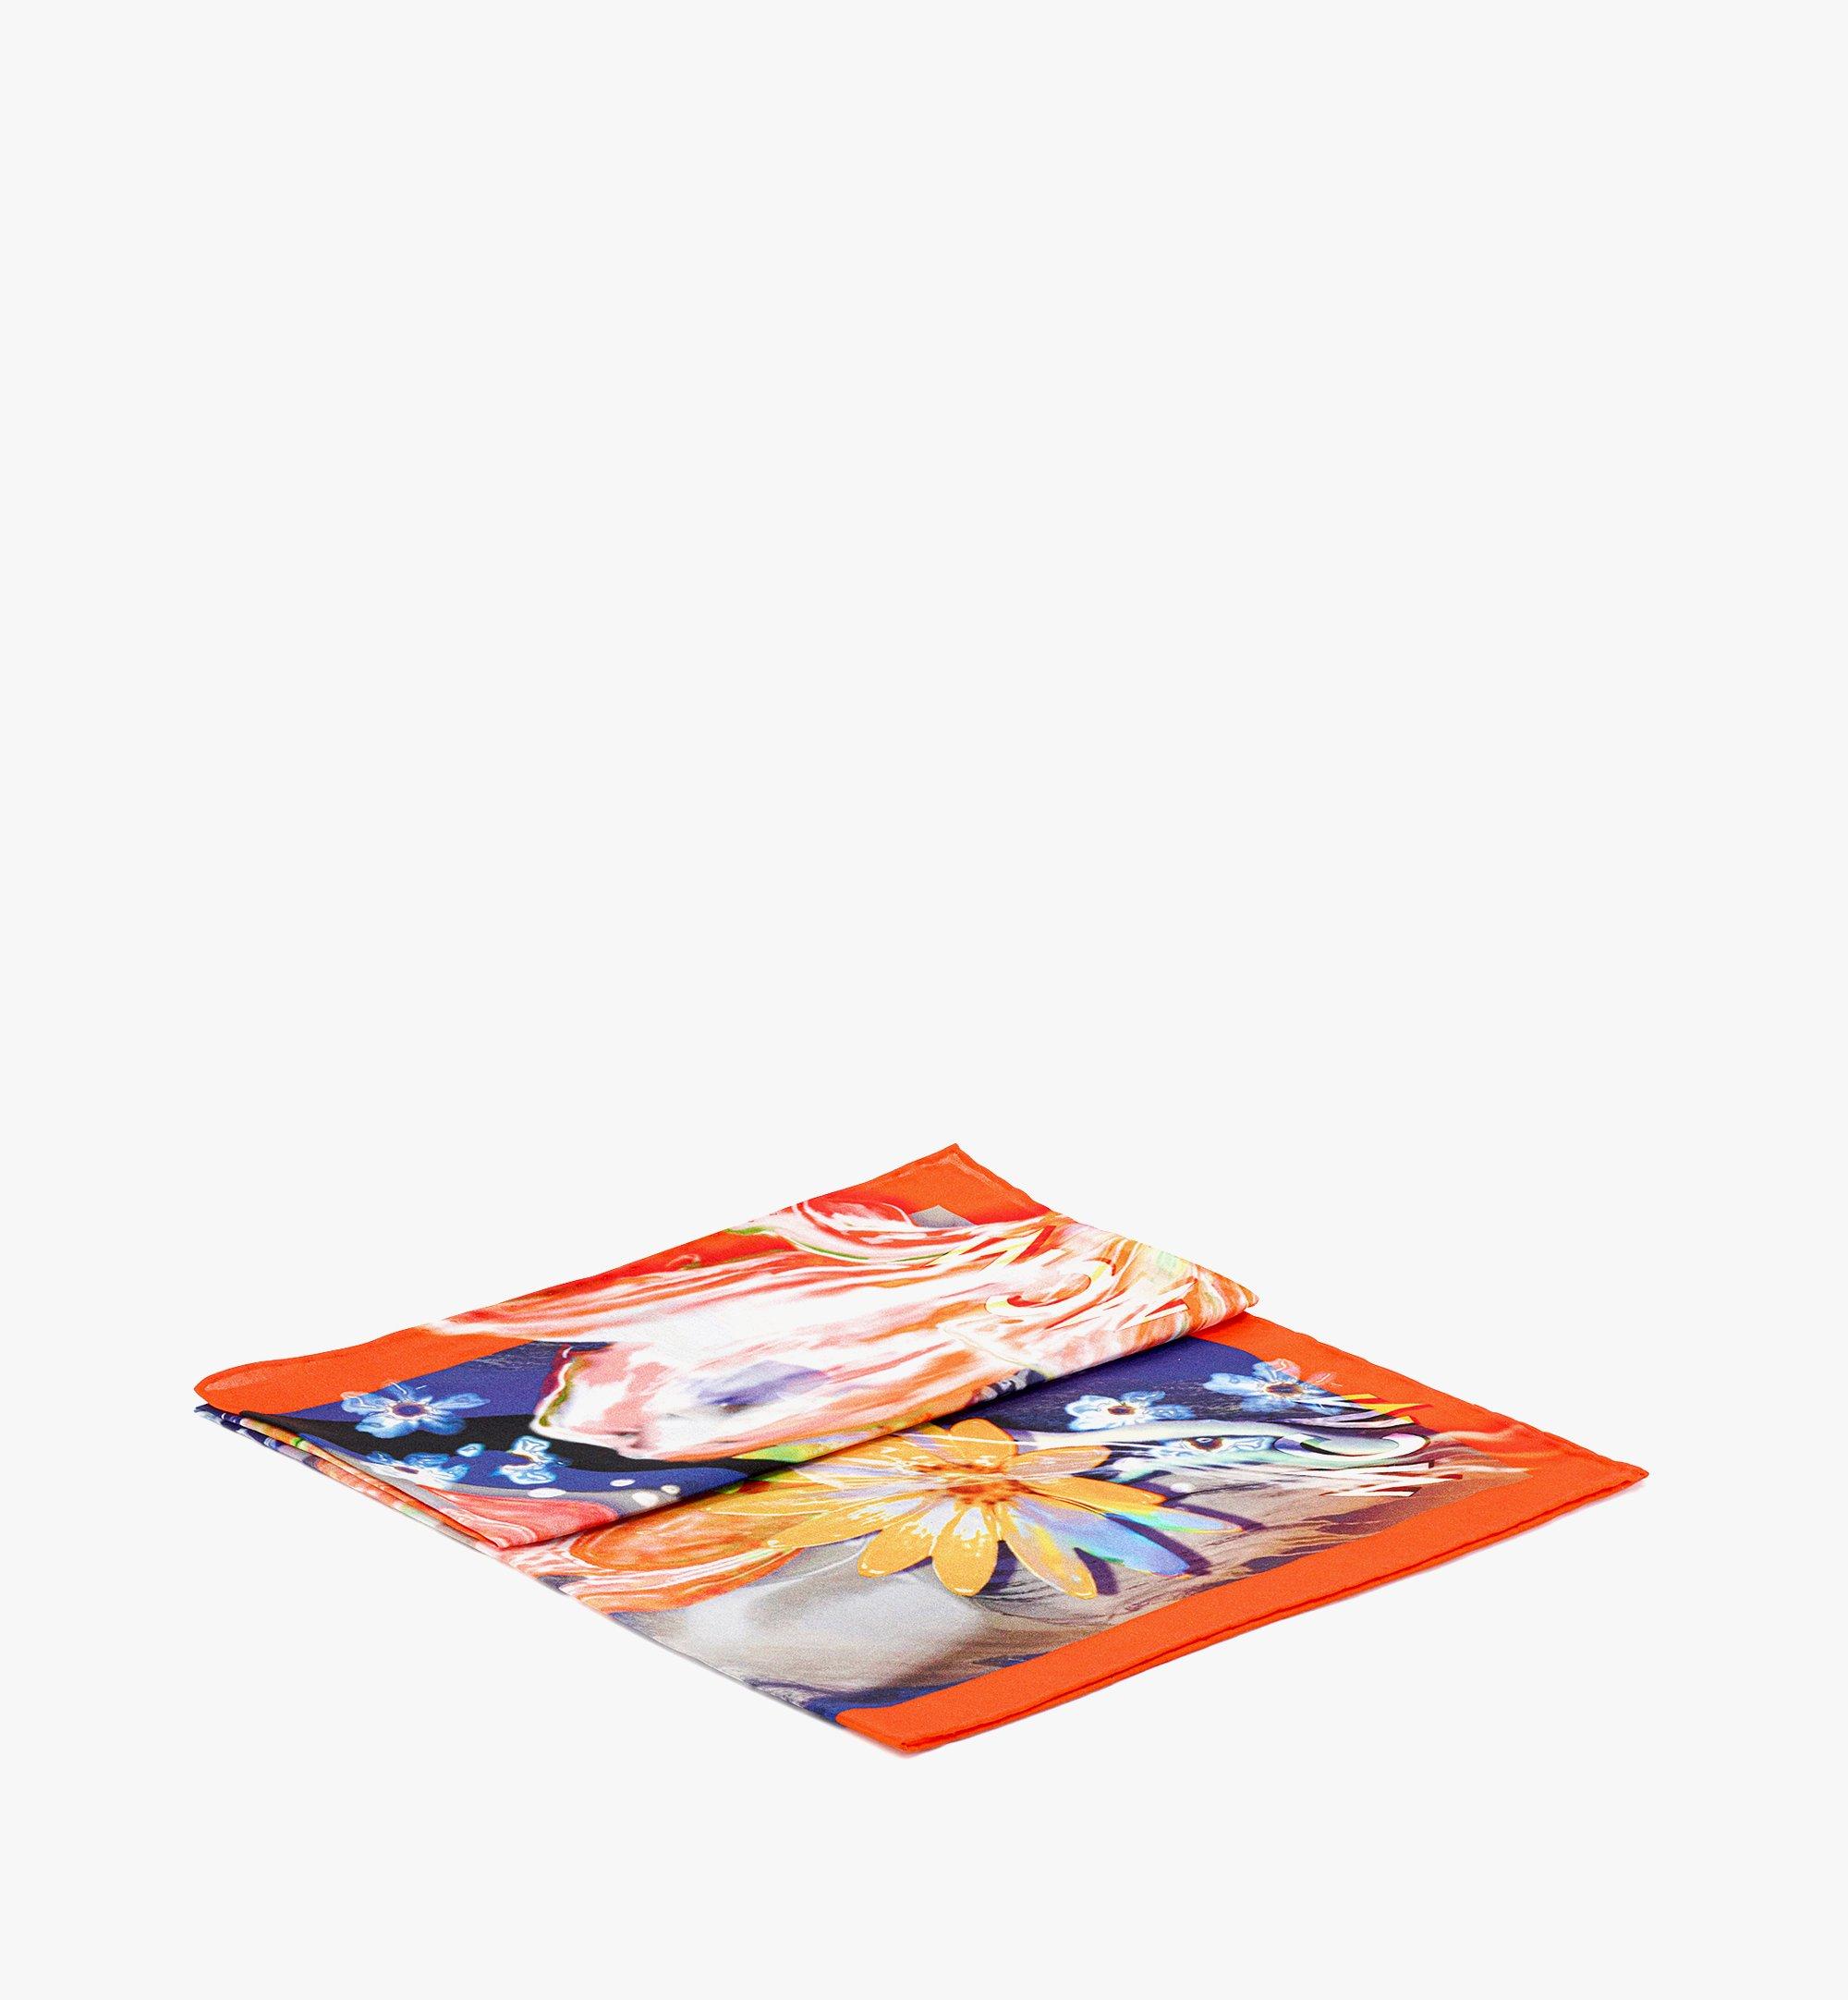 MCM Bandana-Tuch mit Blumenmotiv Orange MEFDAMM12O0001 Noch mehr sehen 1